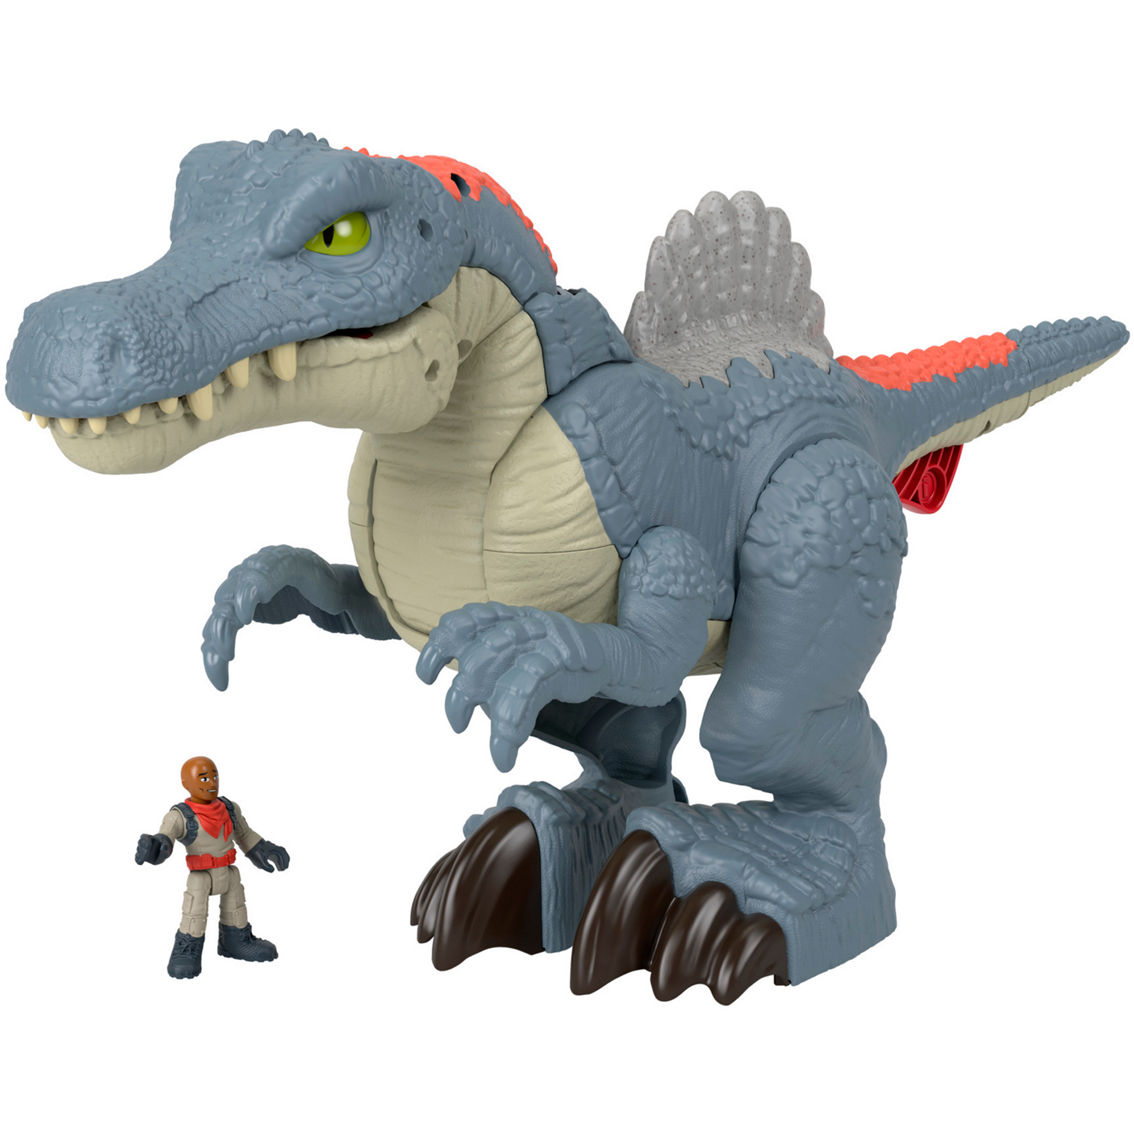 Fisher-Price Imaginext Jurassic World Spinosaurus Dinosaur Toy - Image 3 of 6